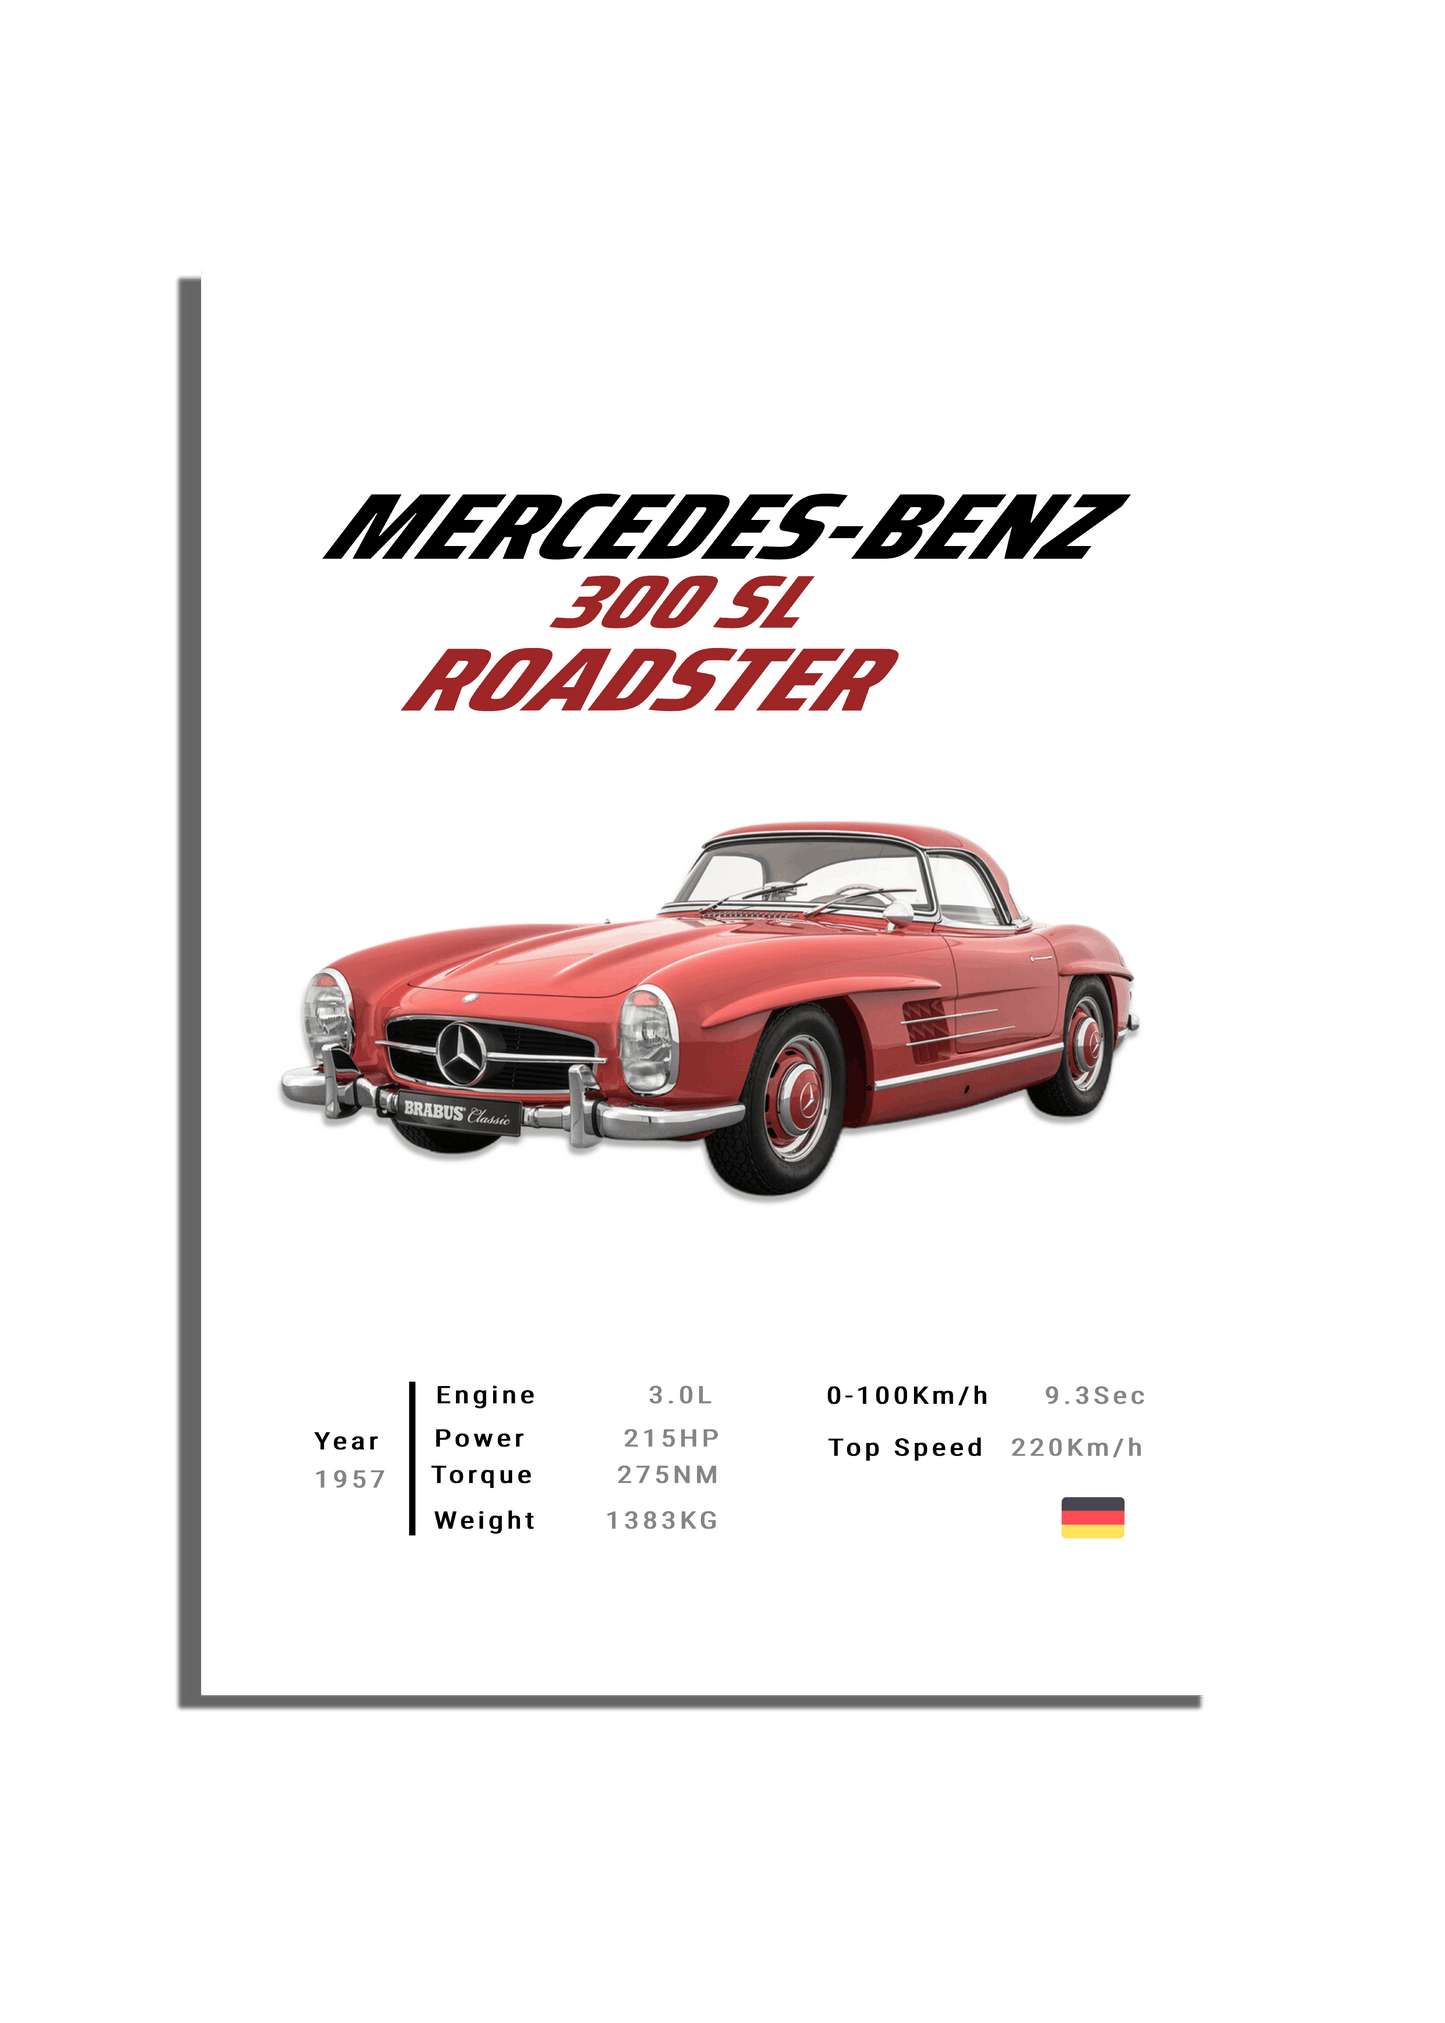 MERCEDES-BENZ 300 SL ROADSTER